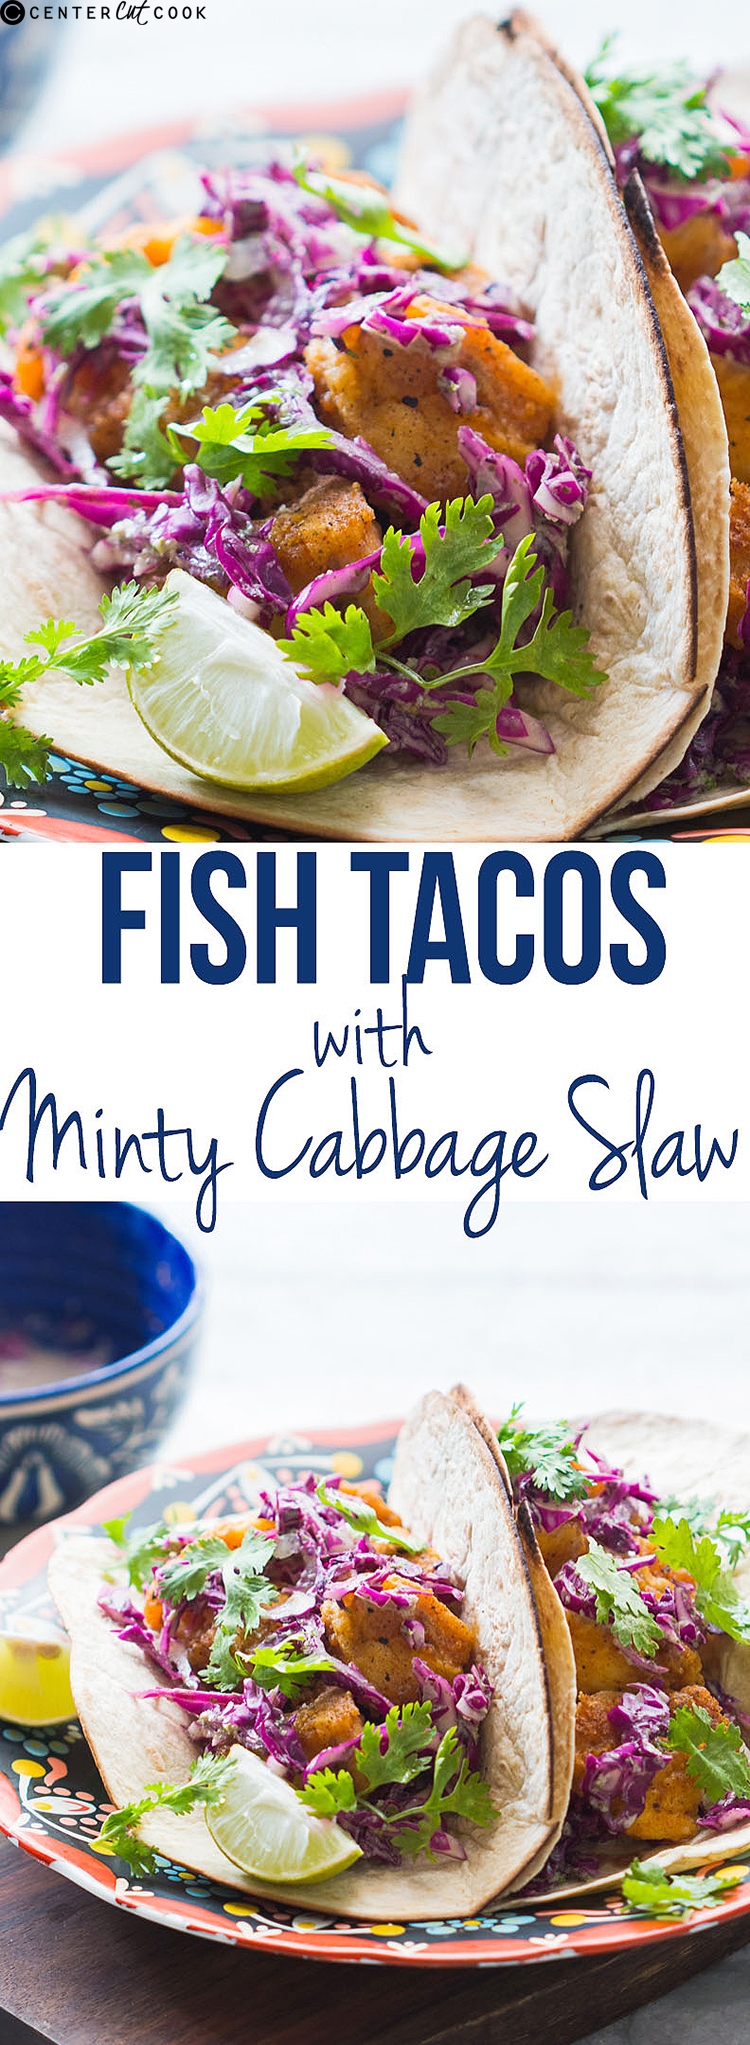 fish tacos minty yogurt red cabbage slaw pin